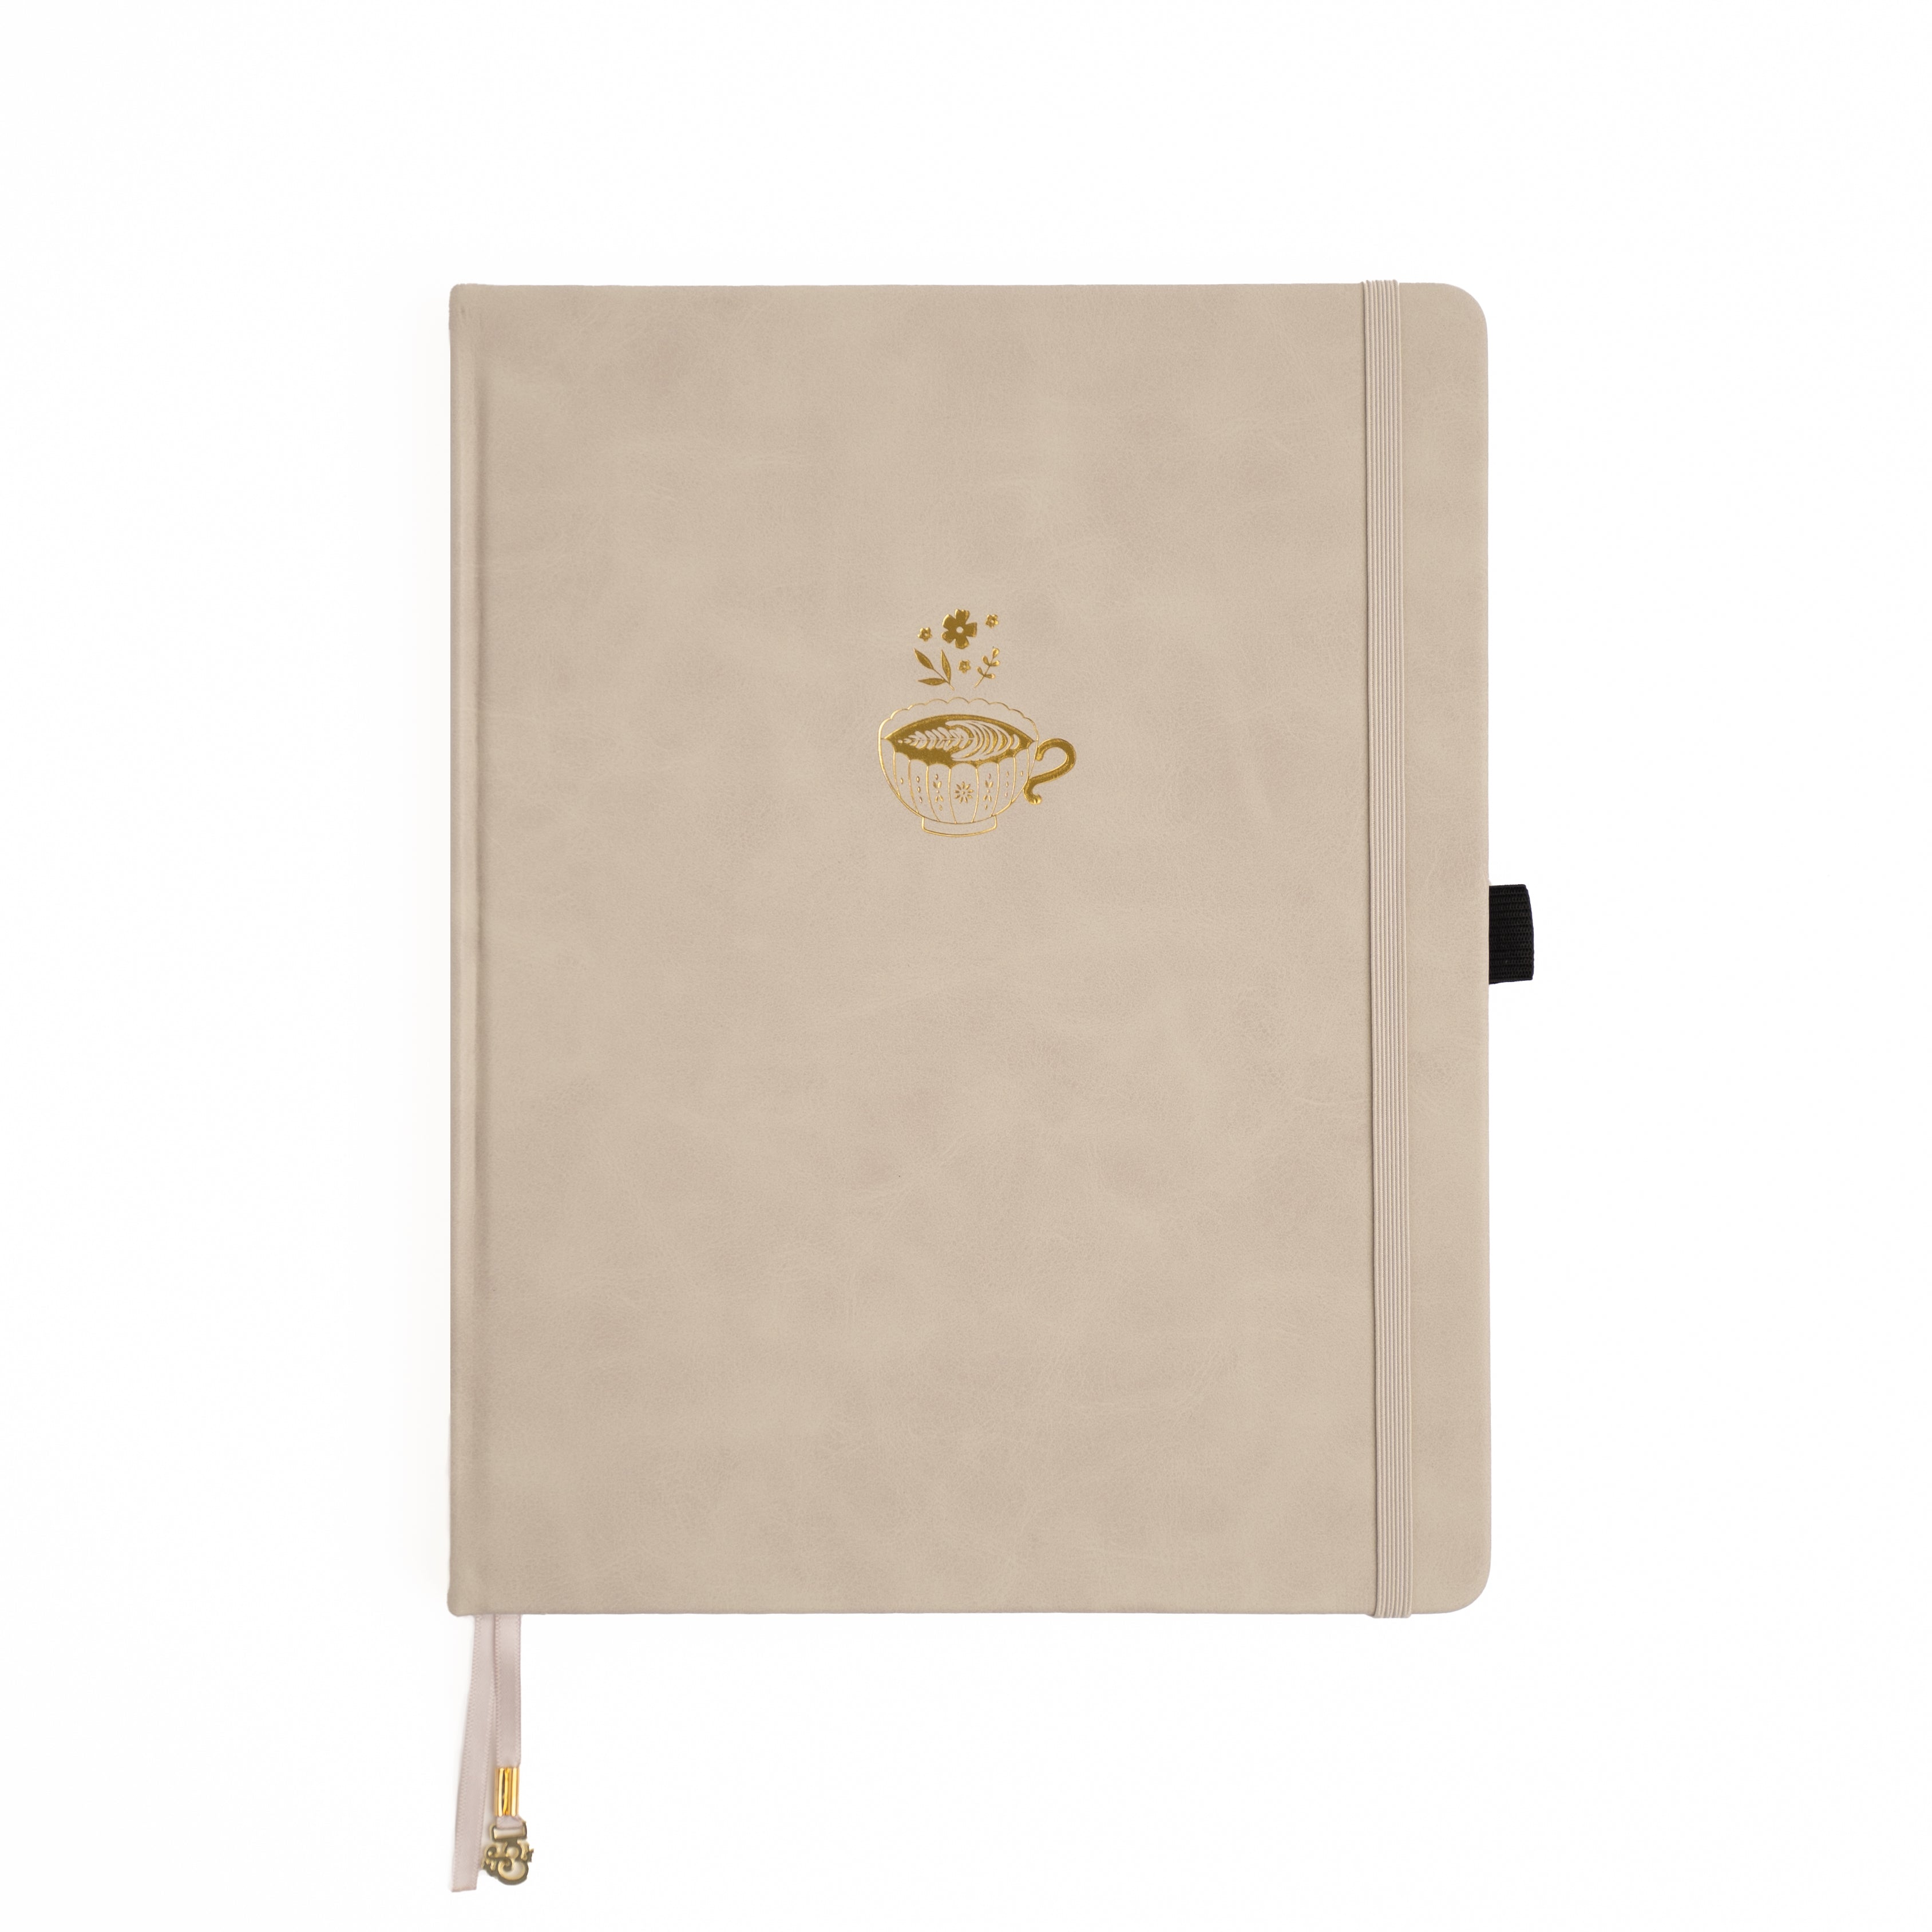 Archer and Olive Notebook - Latte Love Design